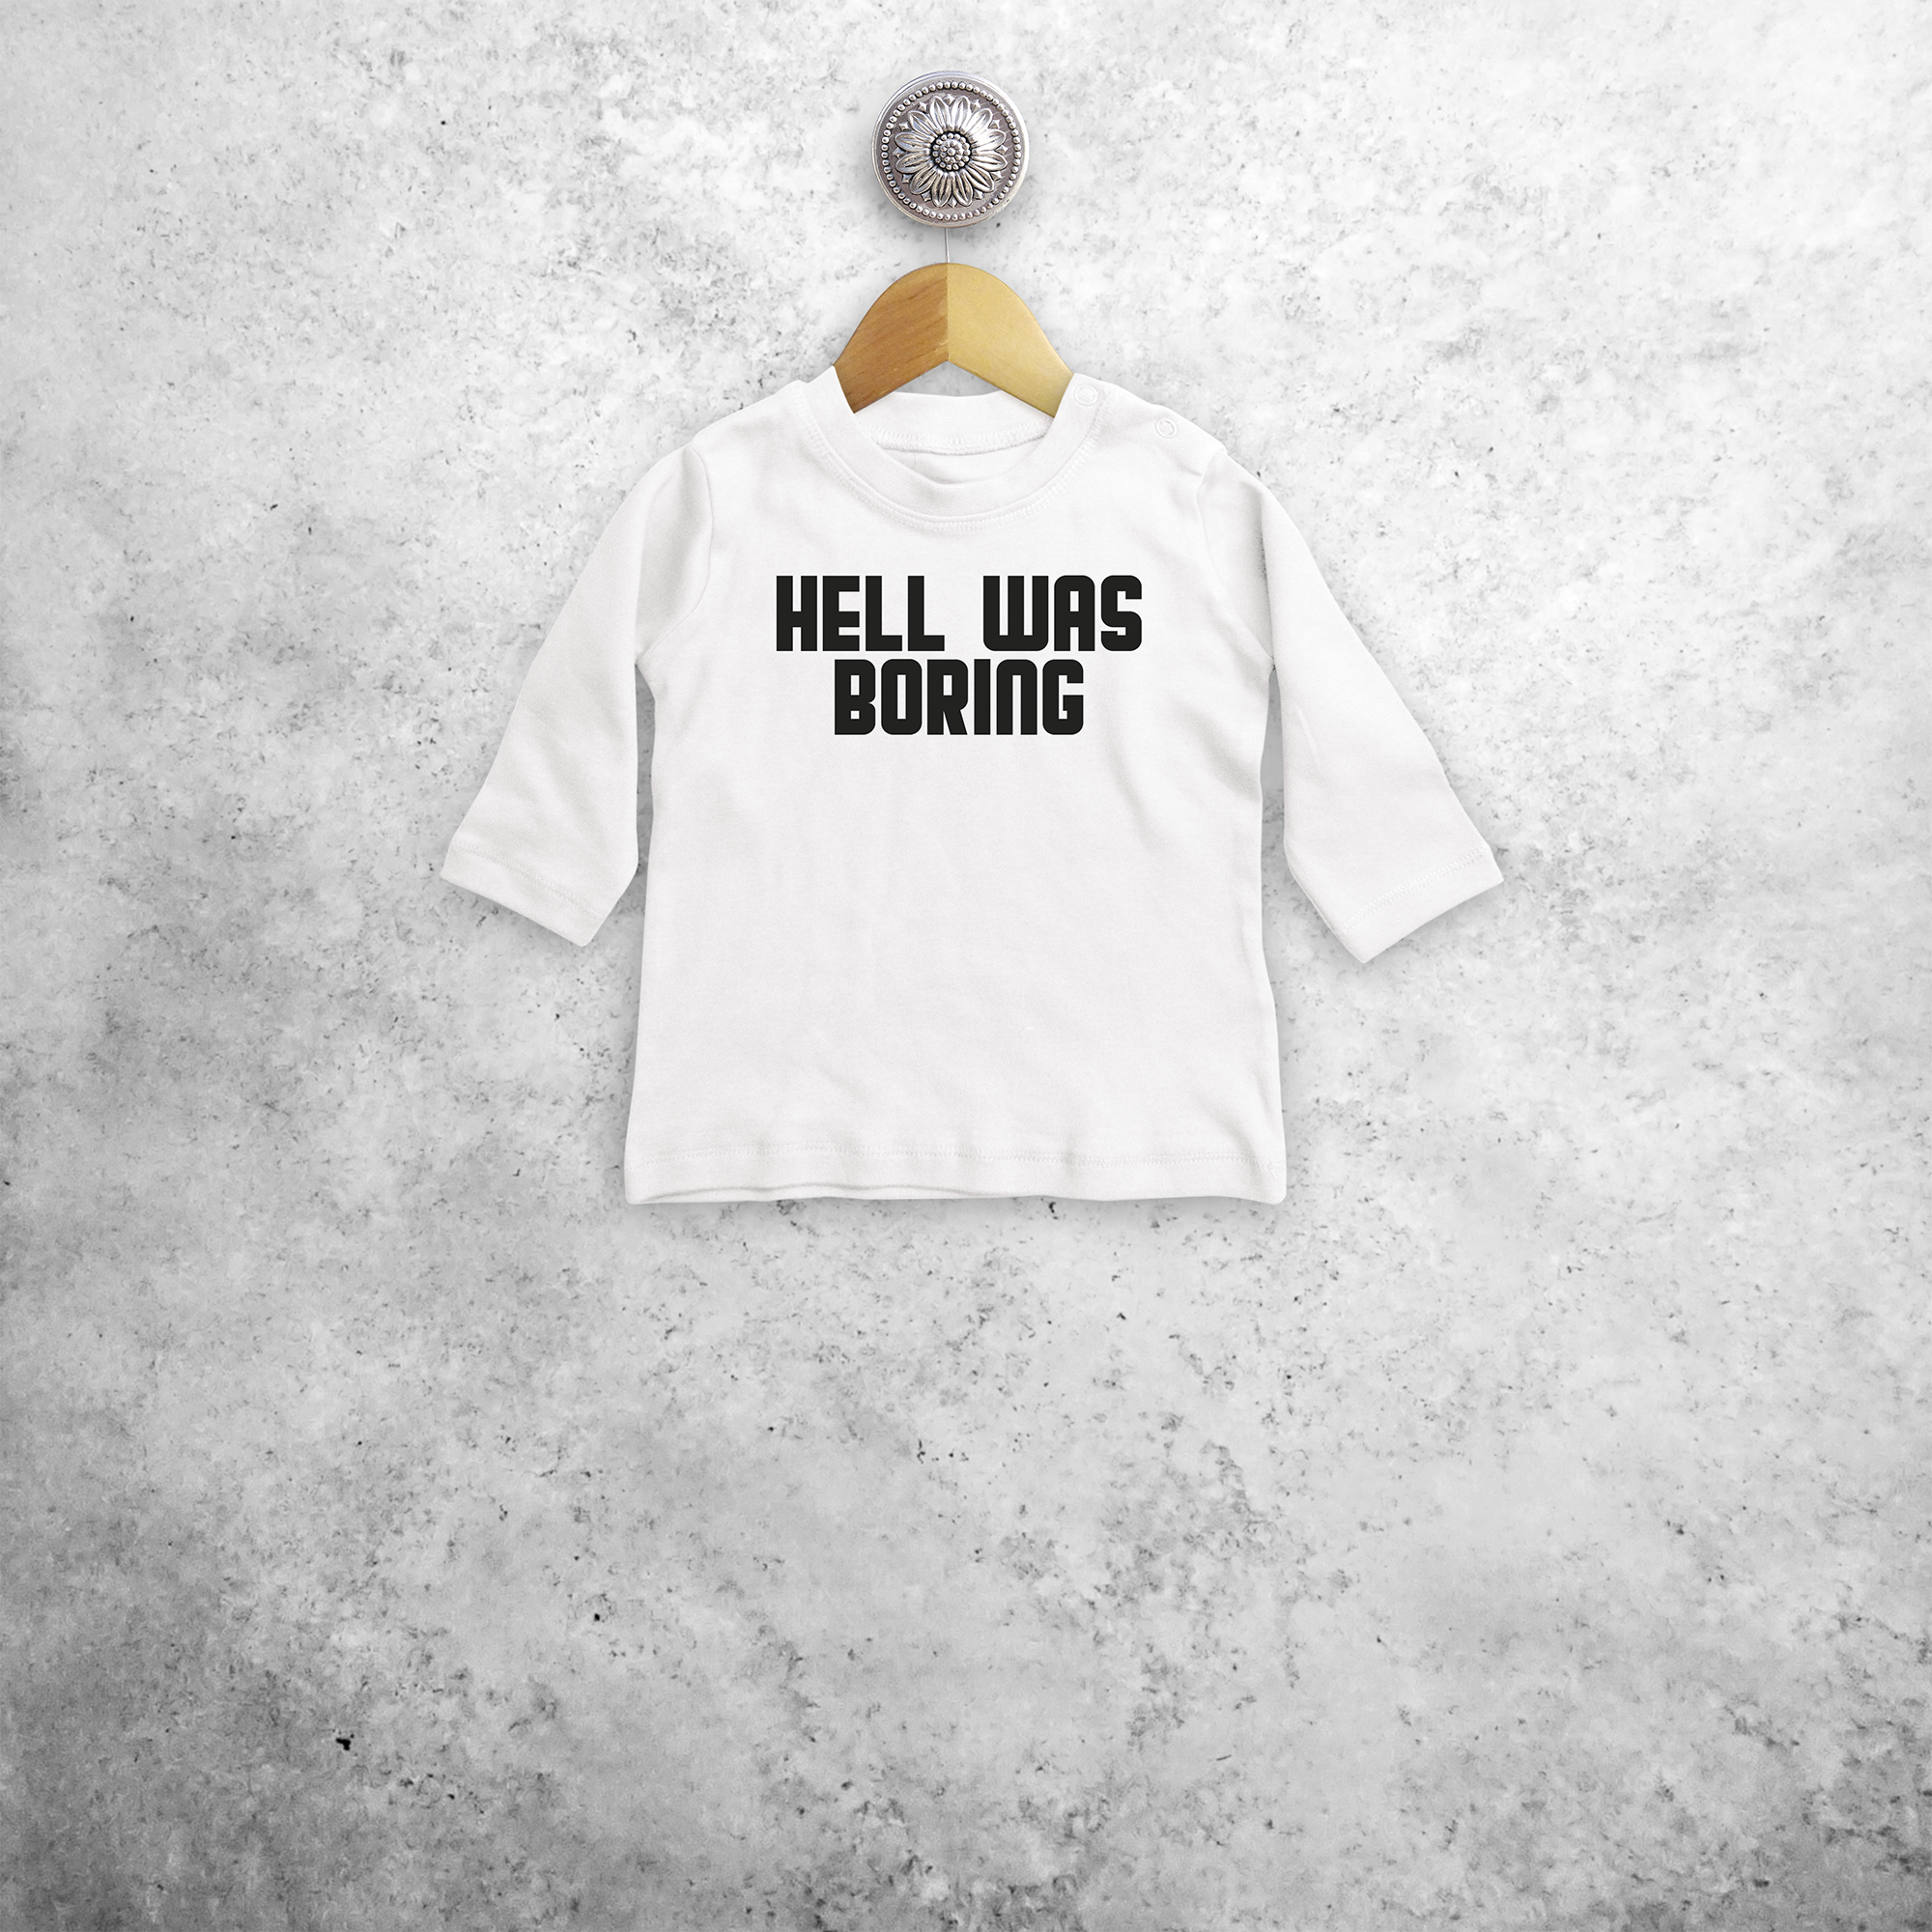 'Hell was boring' baby longsleeve shirt